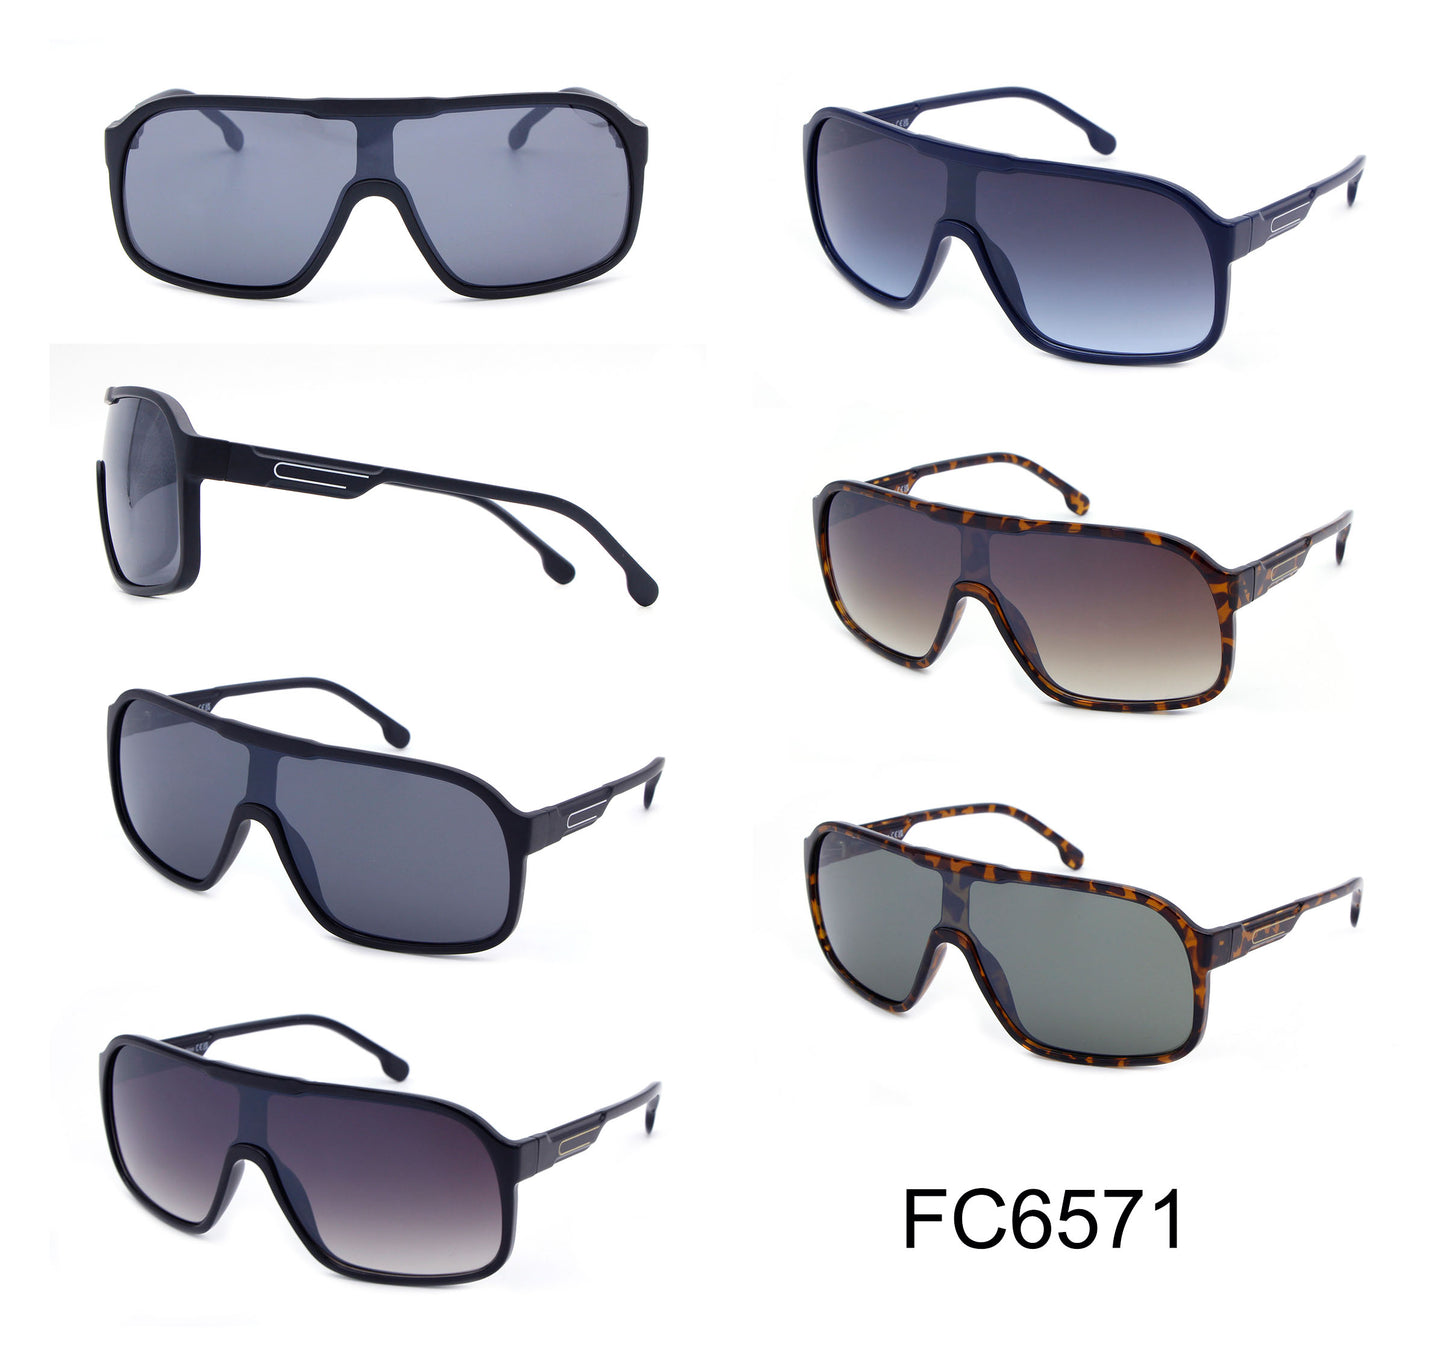 FC 6571 - Plastic One Piece Flat Top Sunglasses